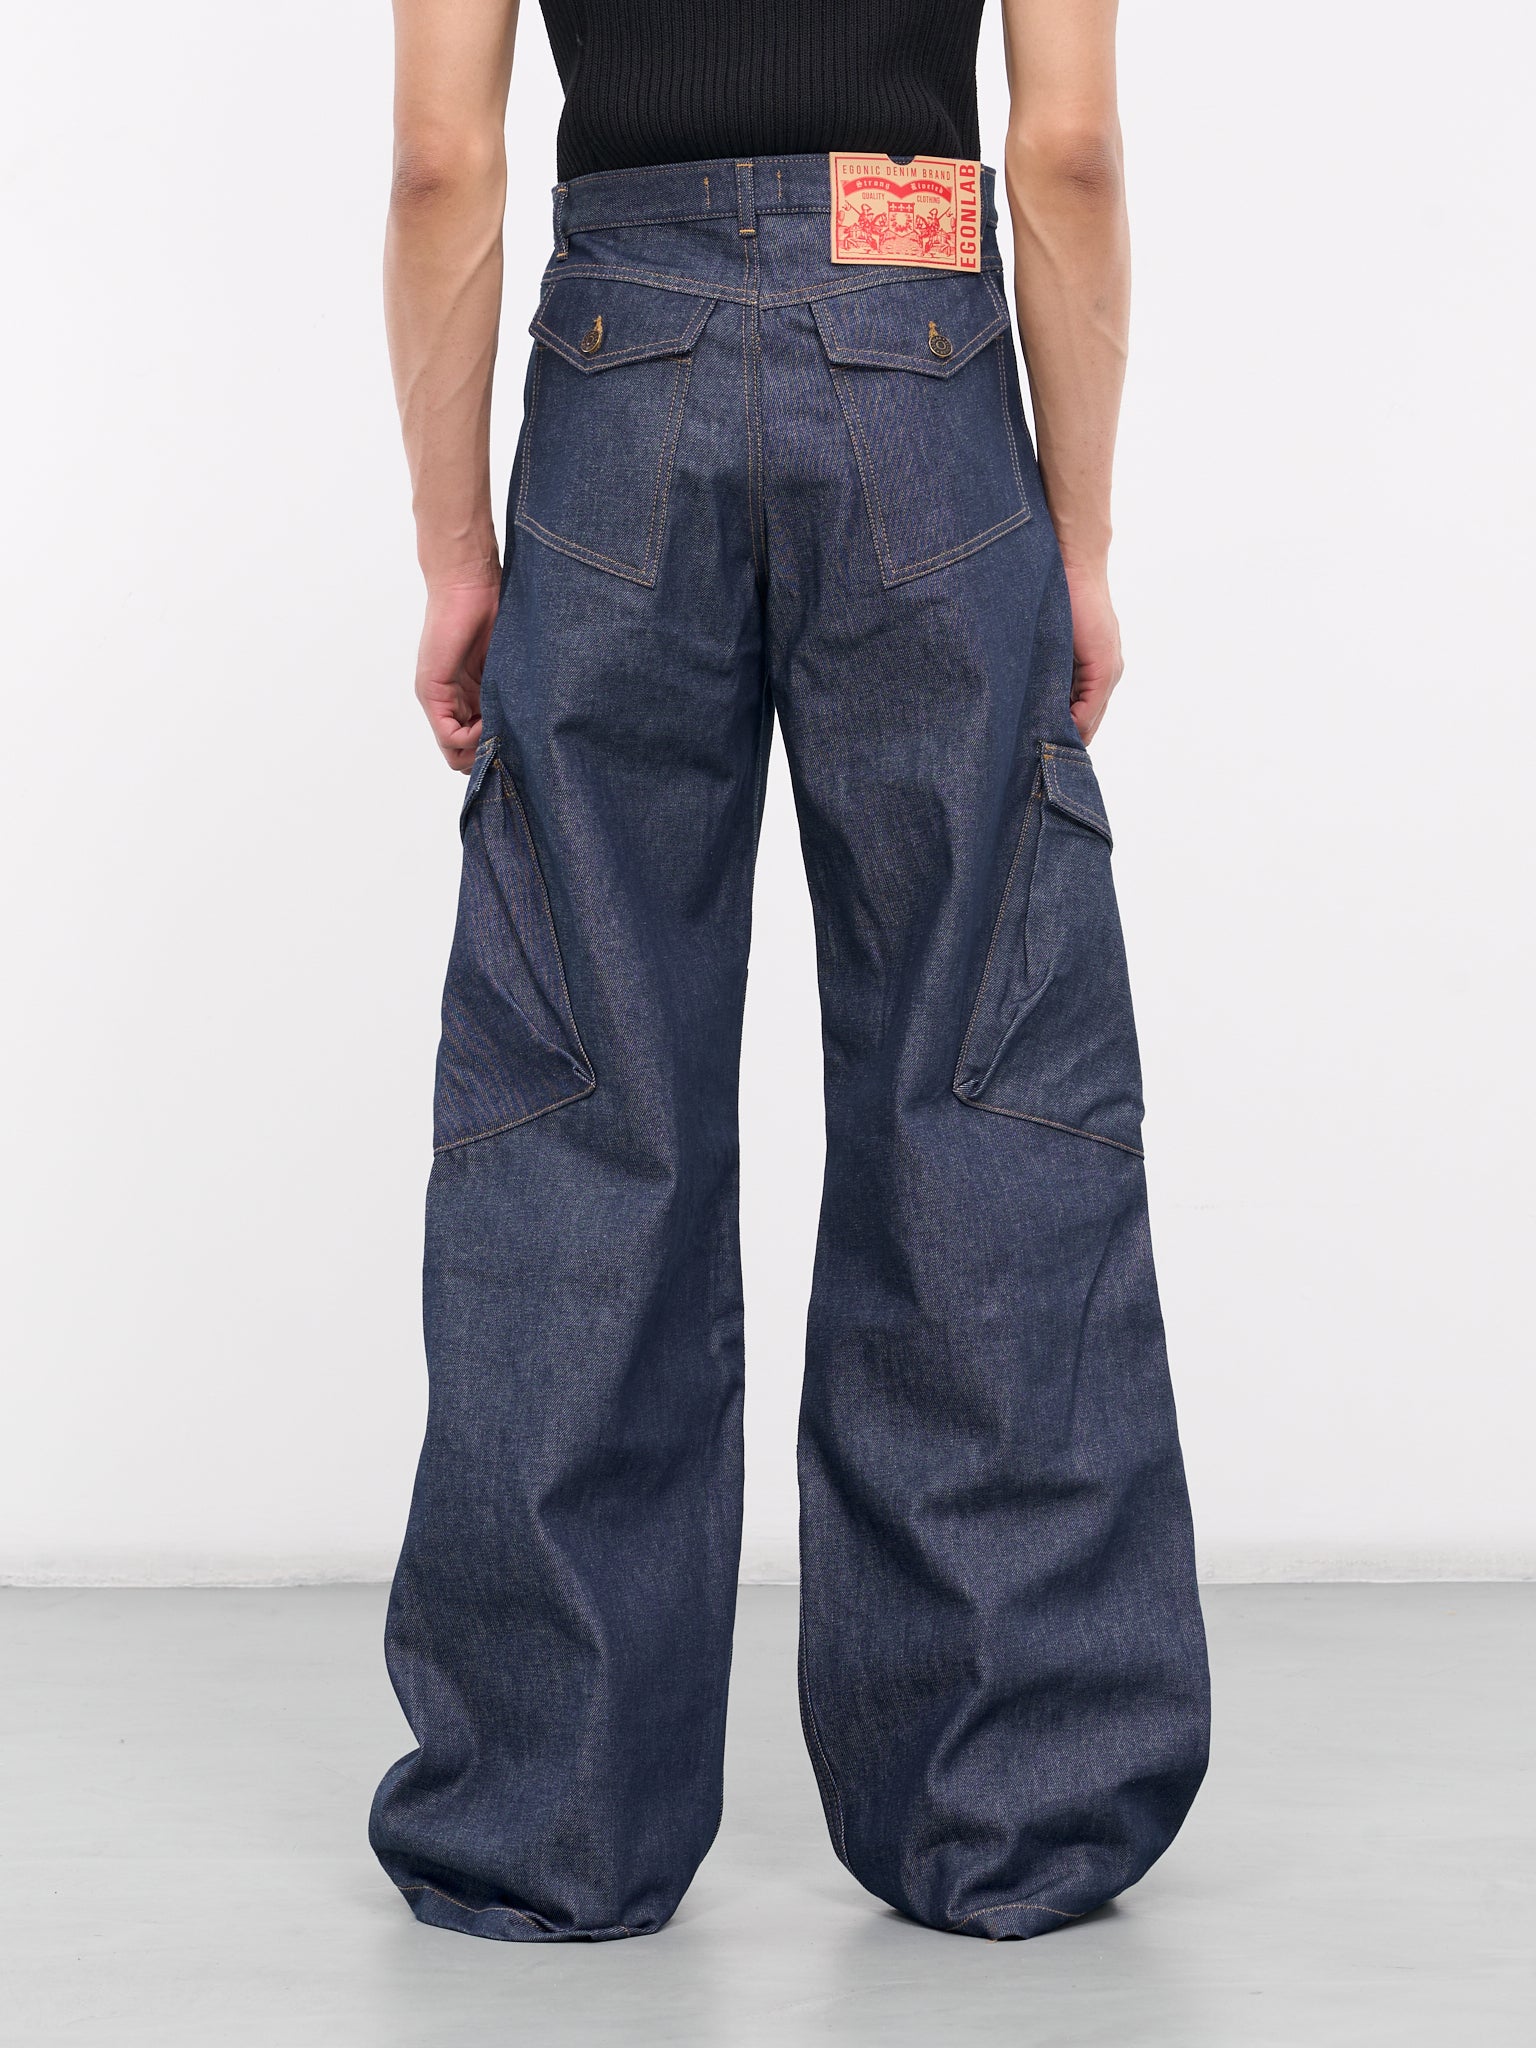 Raw Denim Jeans (DN-001-RAW)